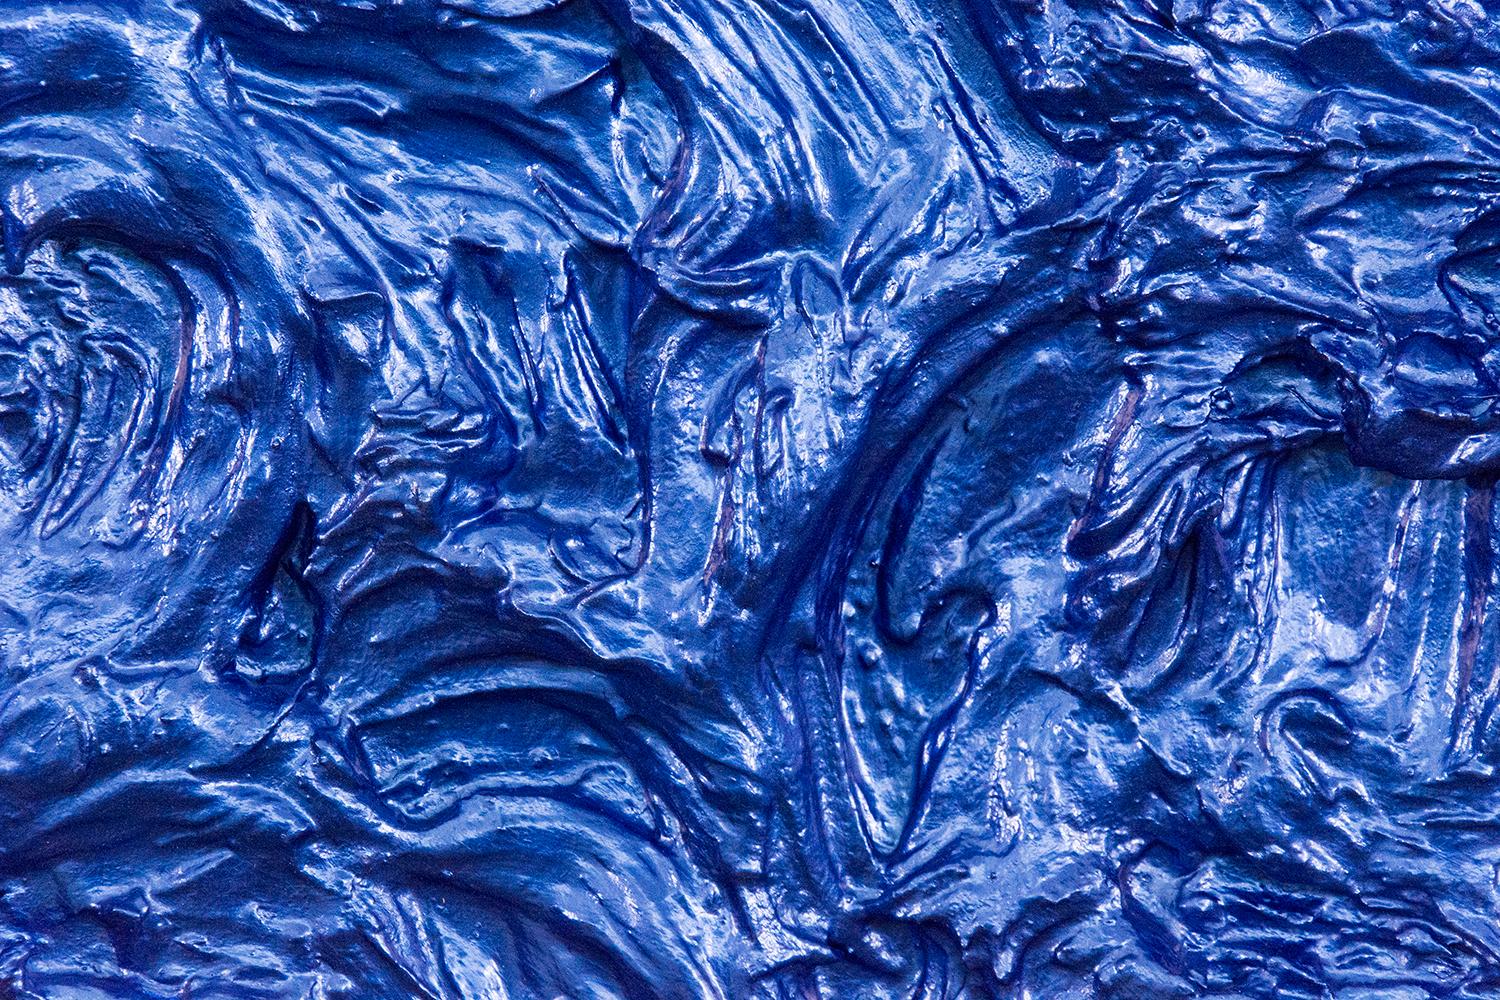 Tondo Storm Surge Cobalt - brillant, bleu, empâtement, abstrait, acrylique sur aluminium - Bleu Abstract Painting par Shayne Dark